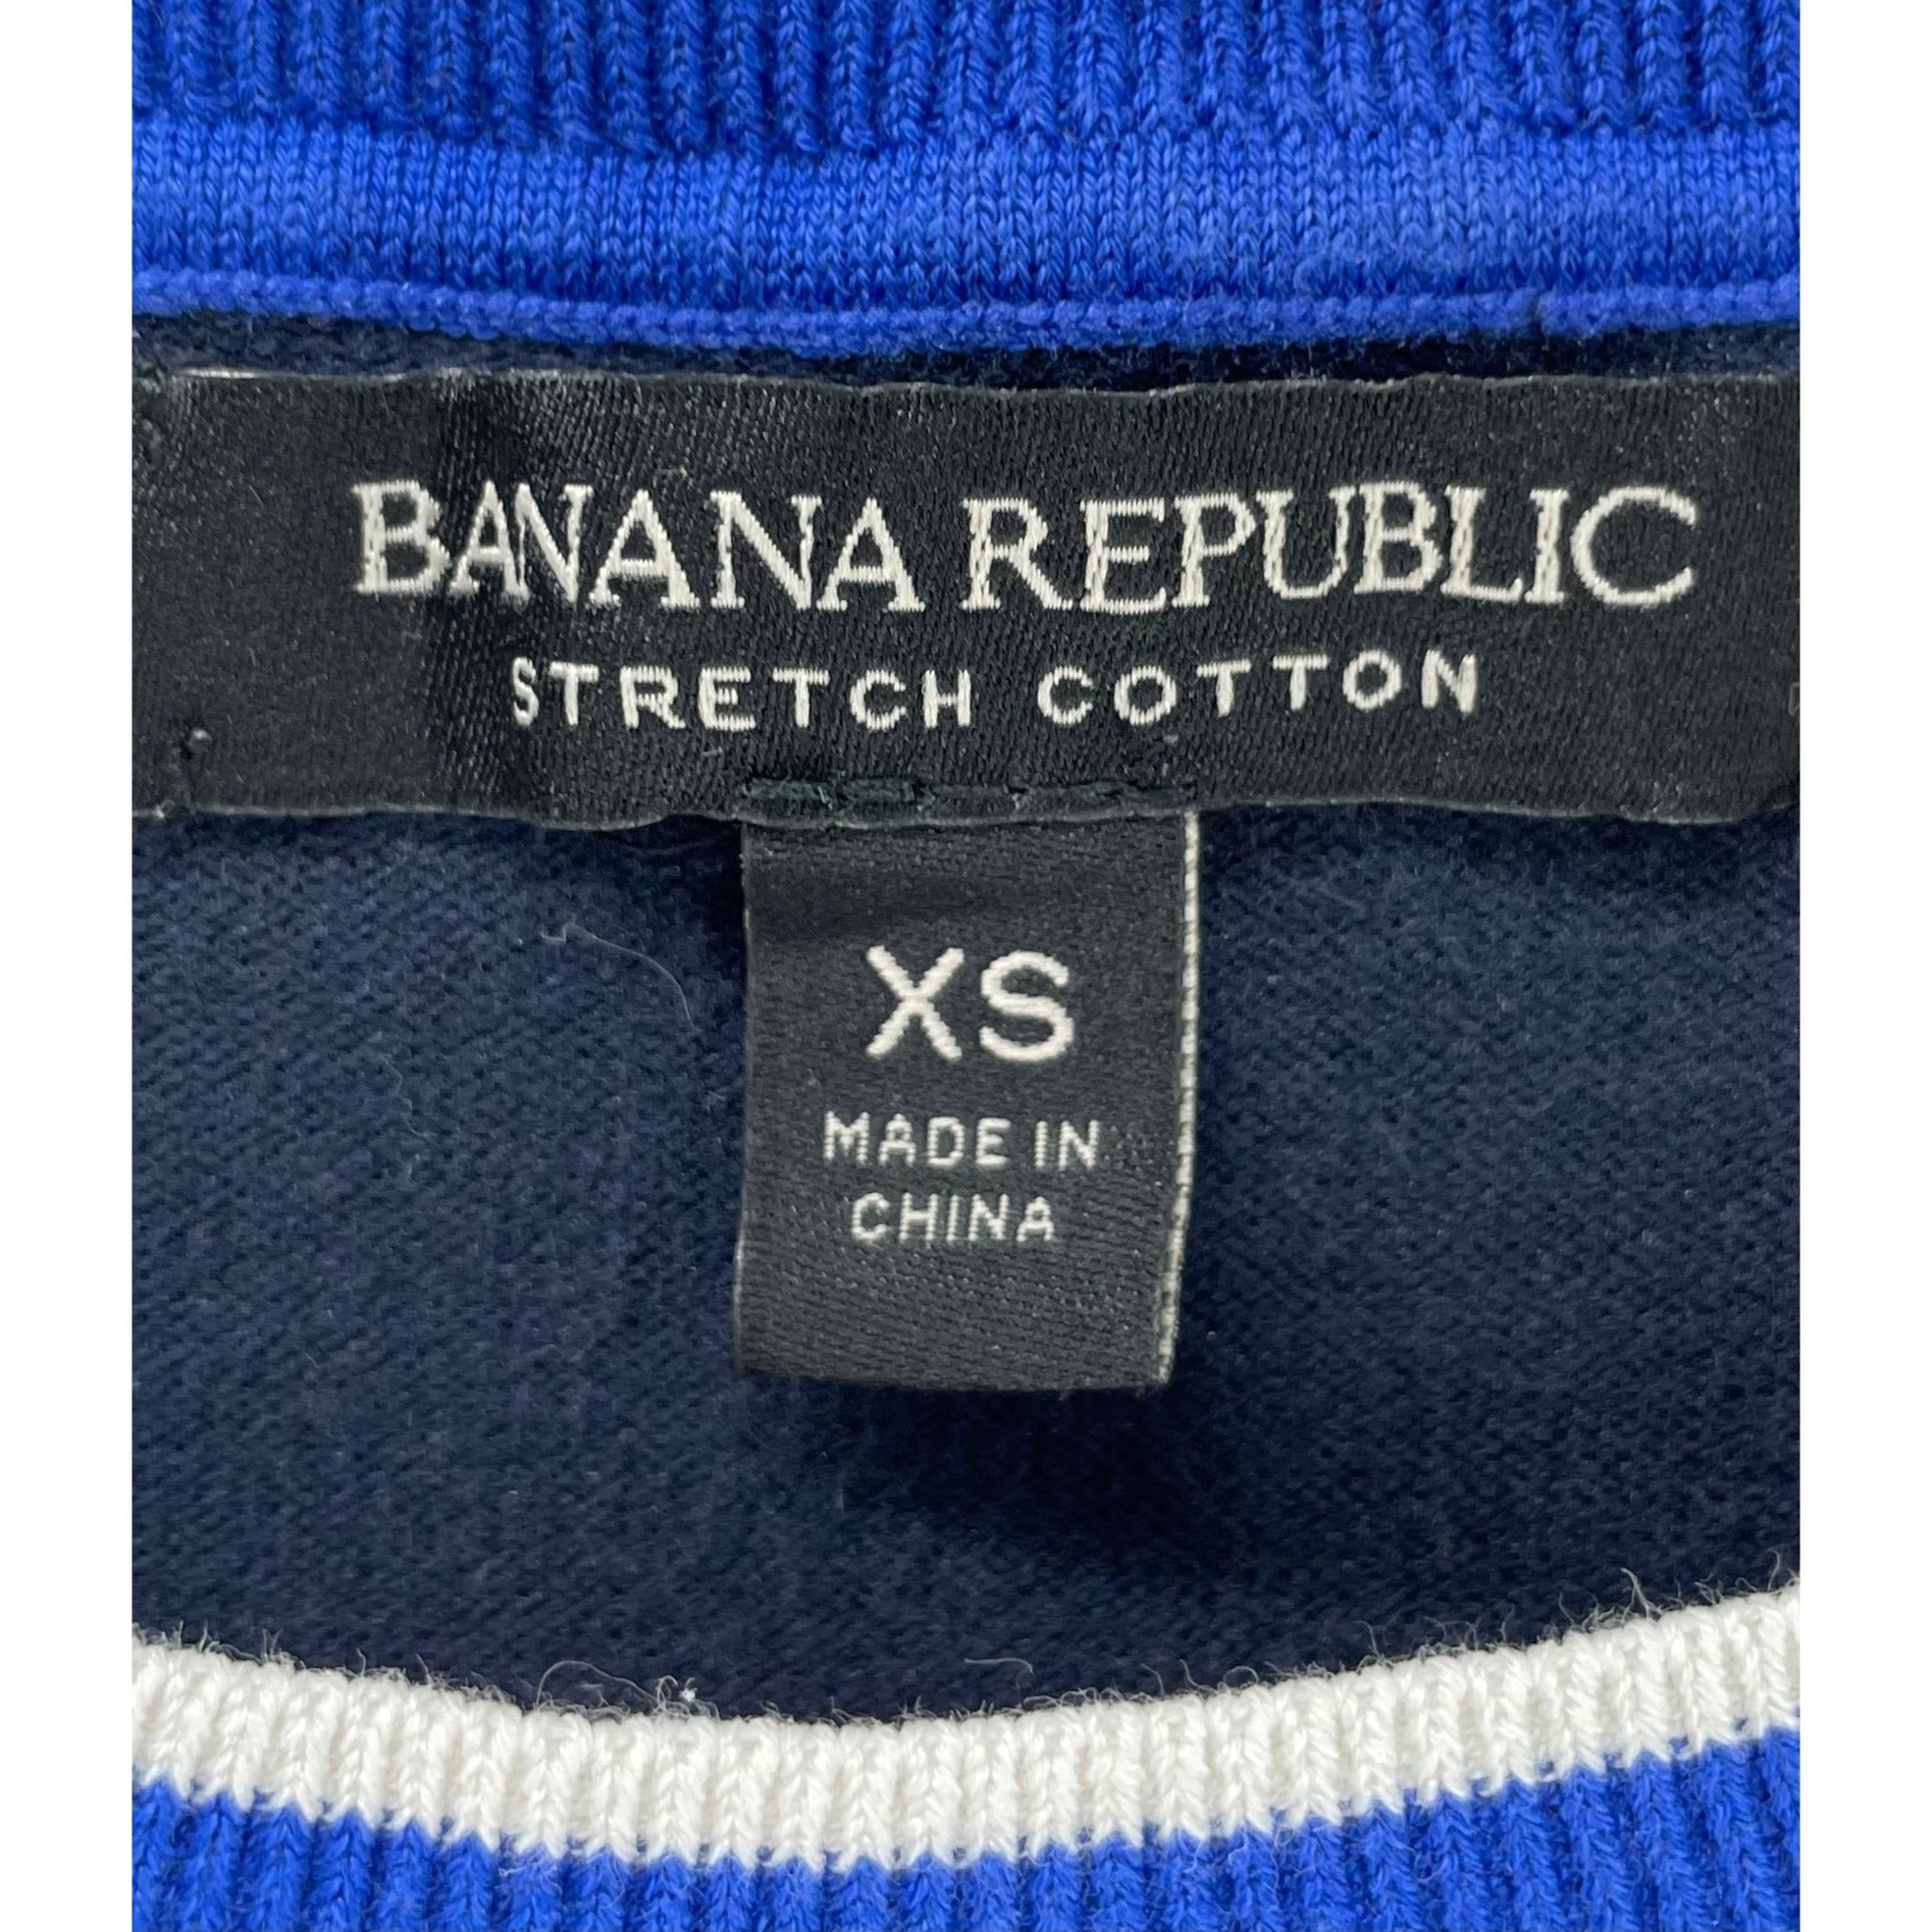 Banana Republic Stretch Cotton Women’s XS Navy & Blue Sweater Vest